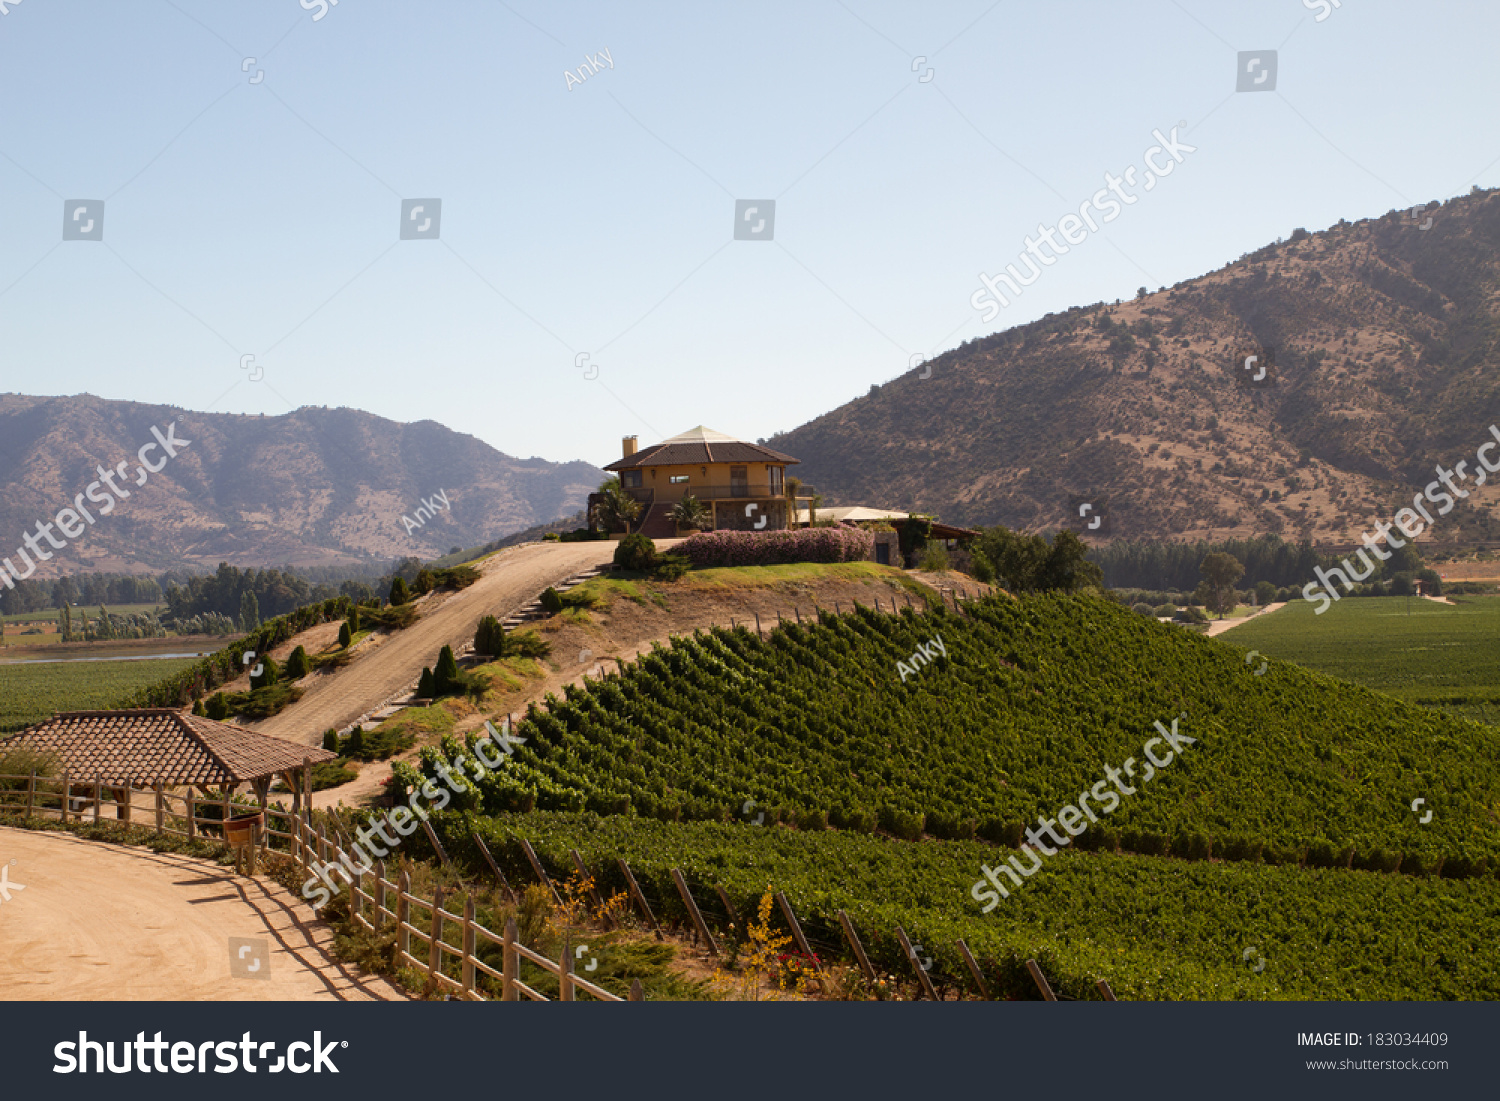 View from the Santa Cruz vineyard in Santa Cruz valley Chile #183034409